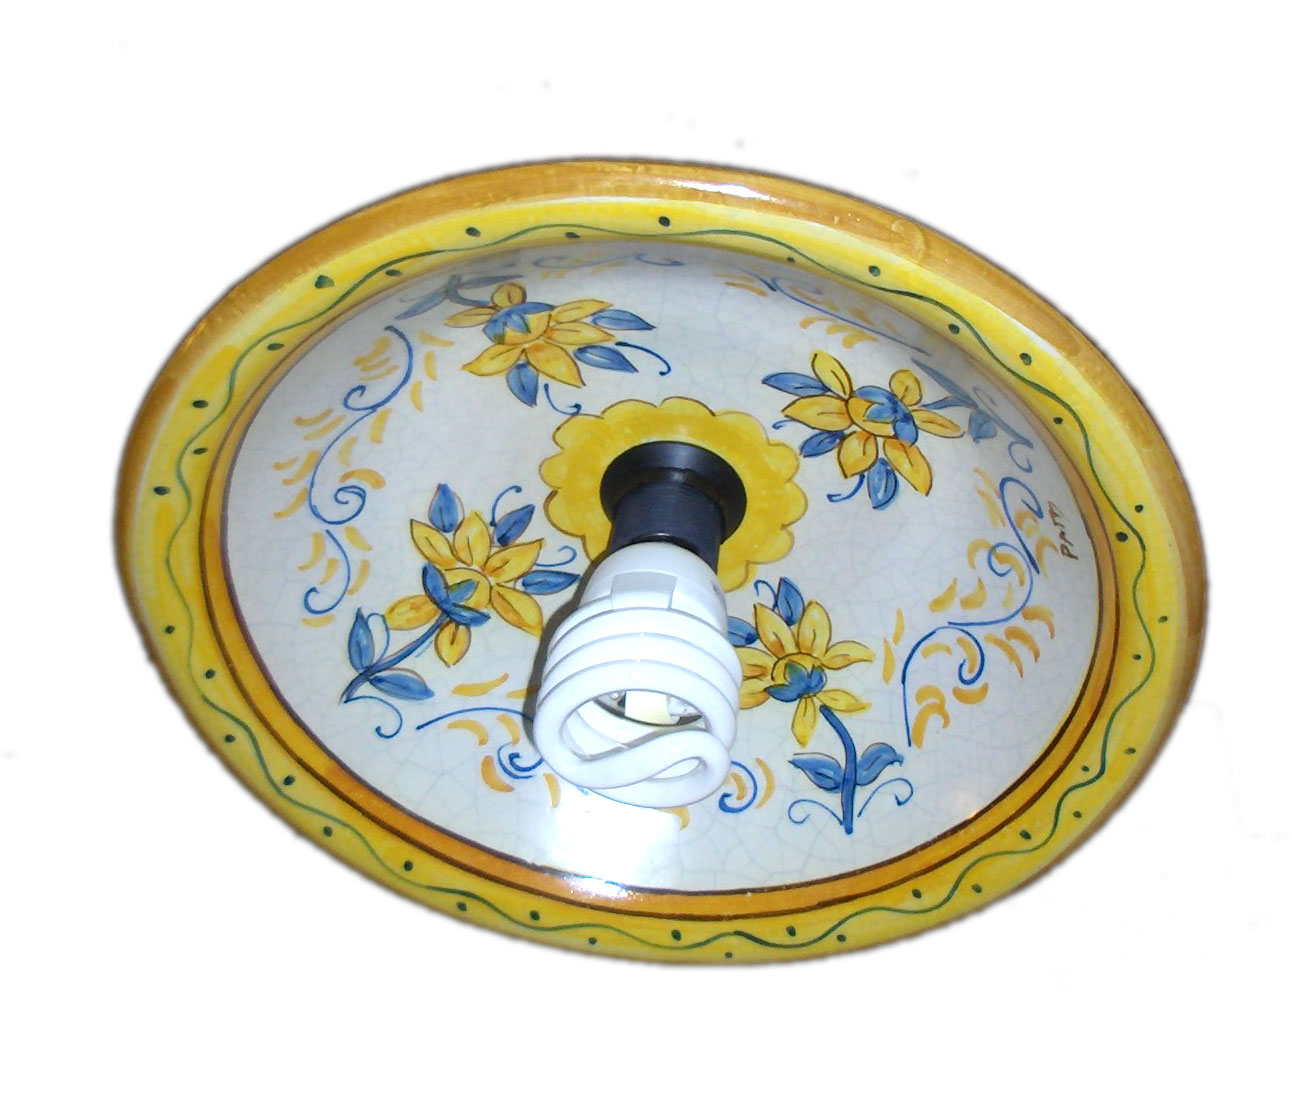 Lampadario liscio, diametro 38 cm, colori giallo ed azzurro